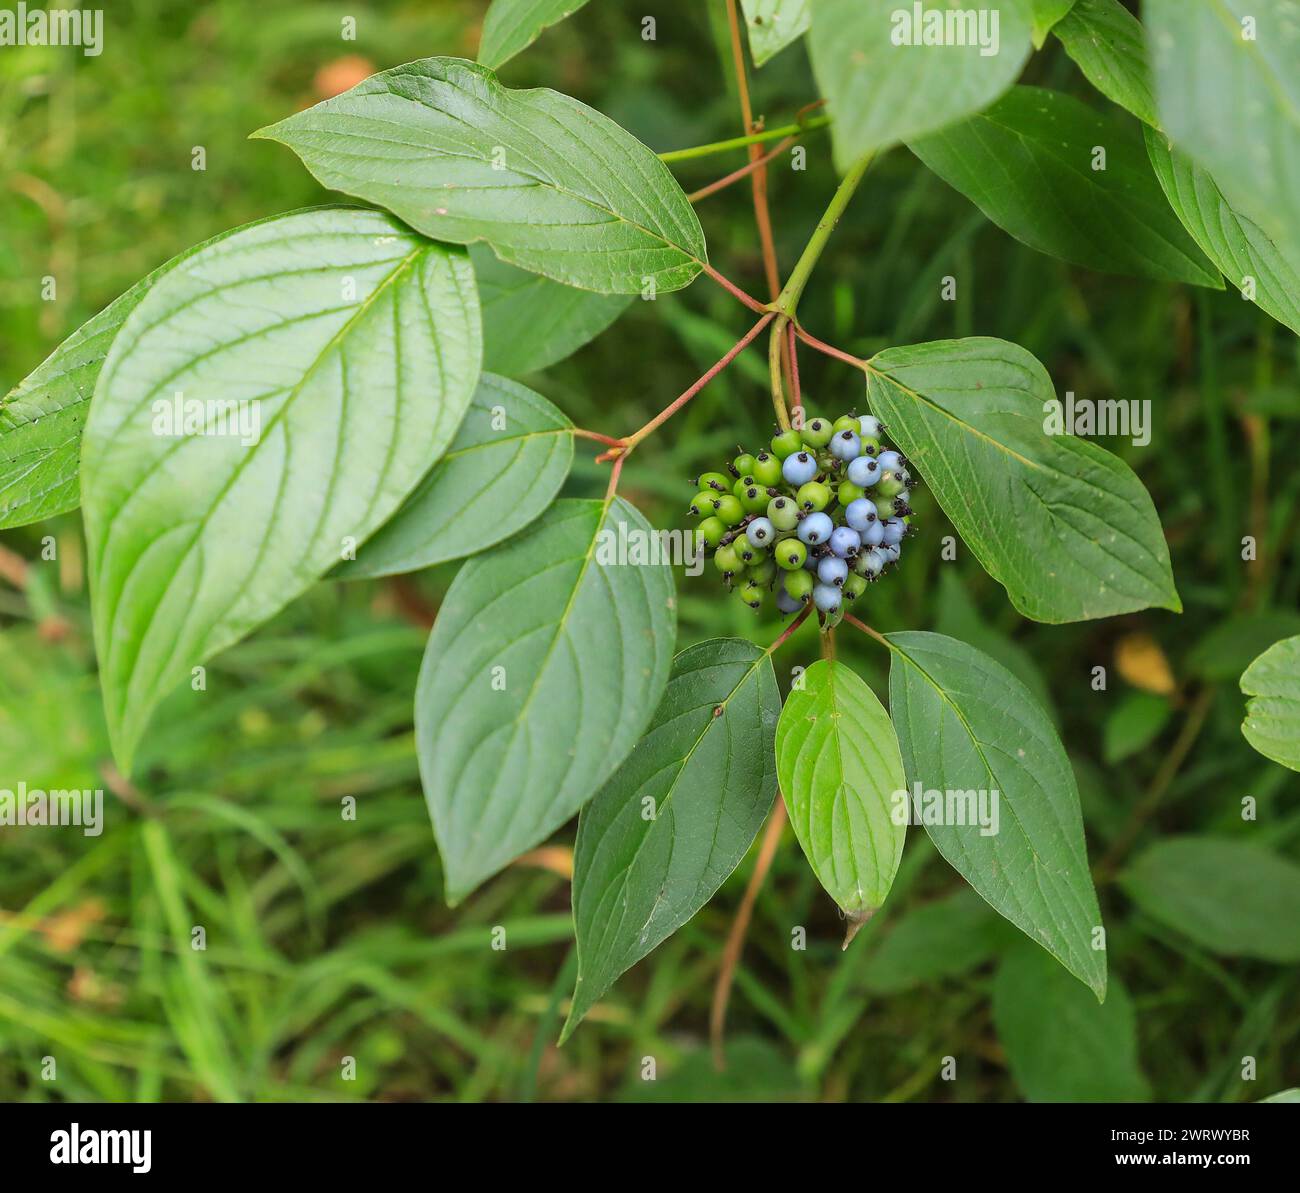 The blue green berries of a Silky Dogwood (Cornus amomum) tree or bush, England, UK Stock Photo